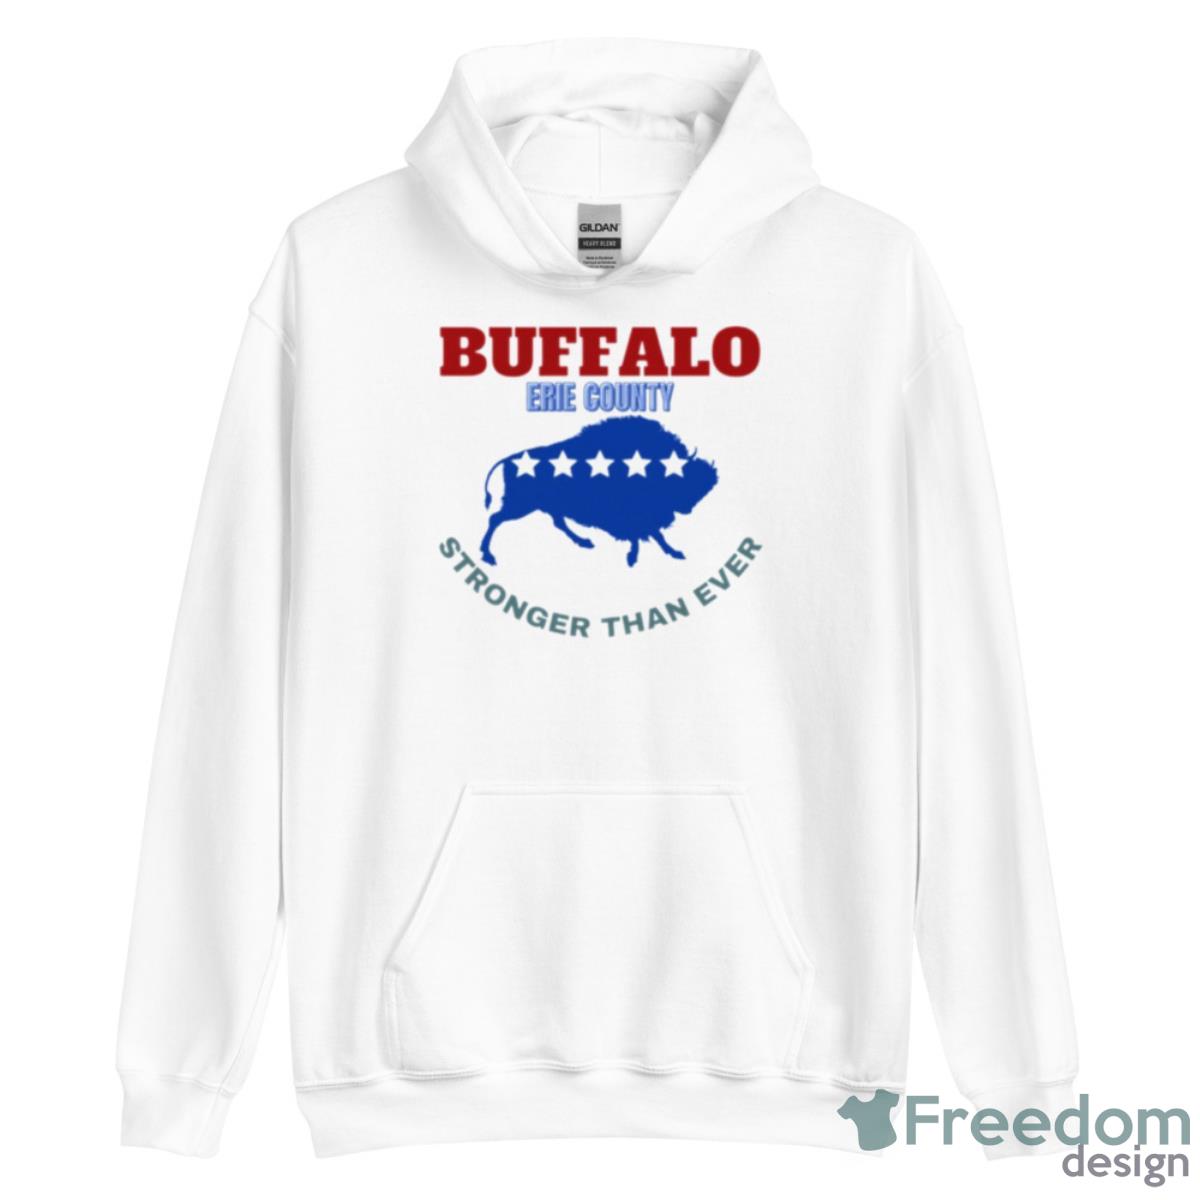 Troubleart Buffalo Usa Blizzard Of The Century Shirt